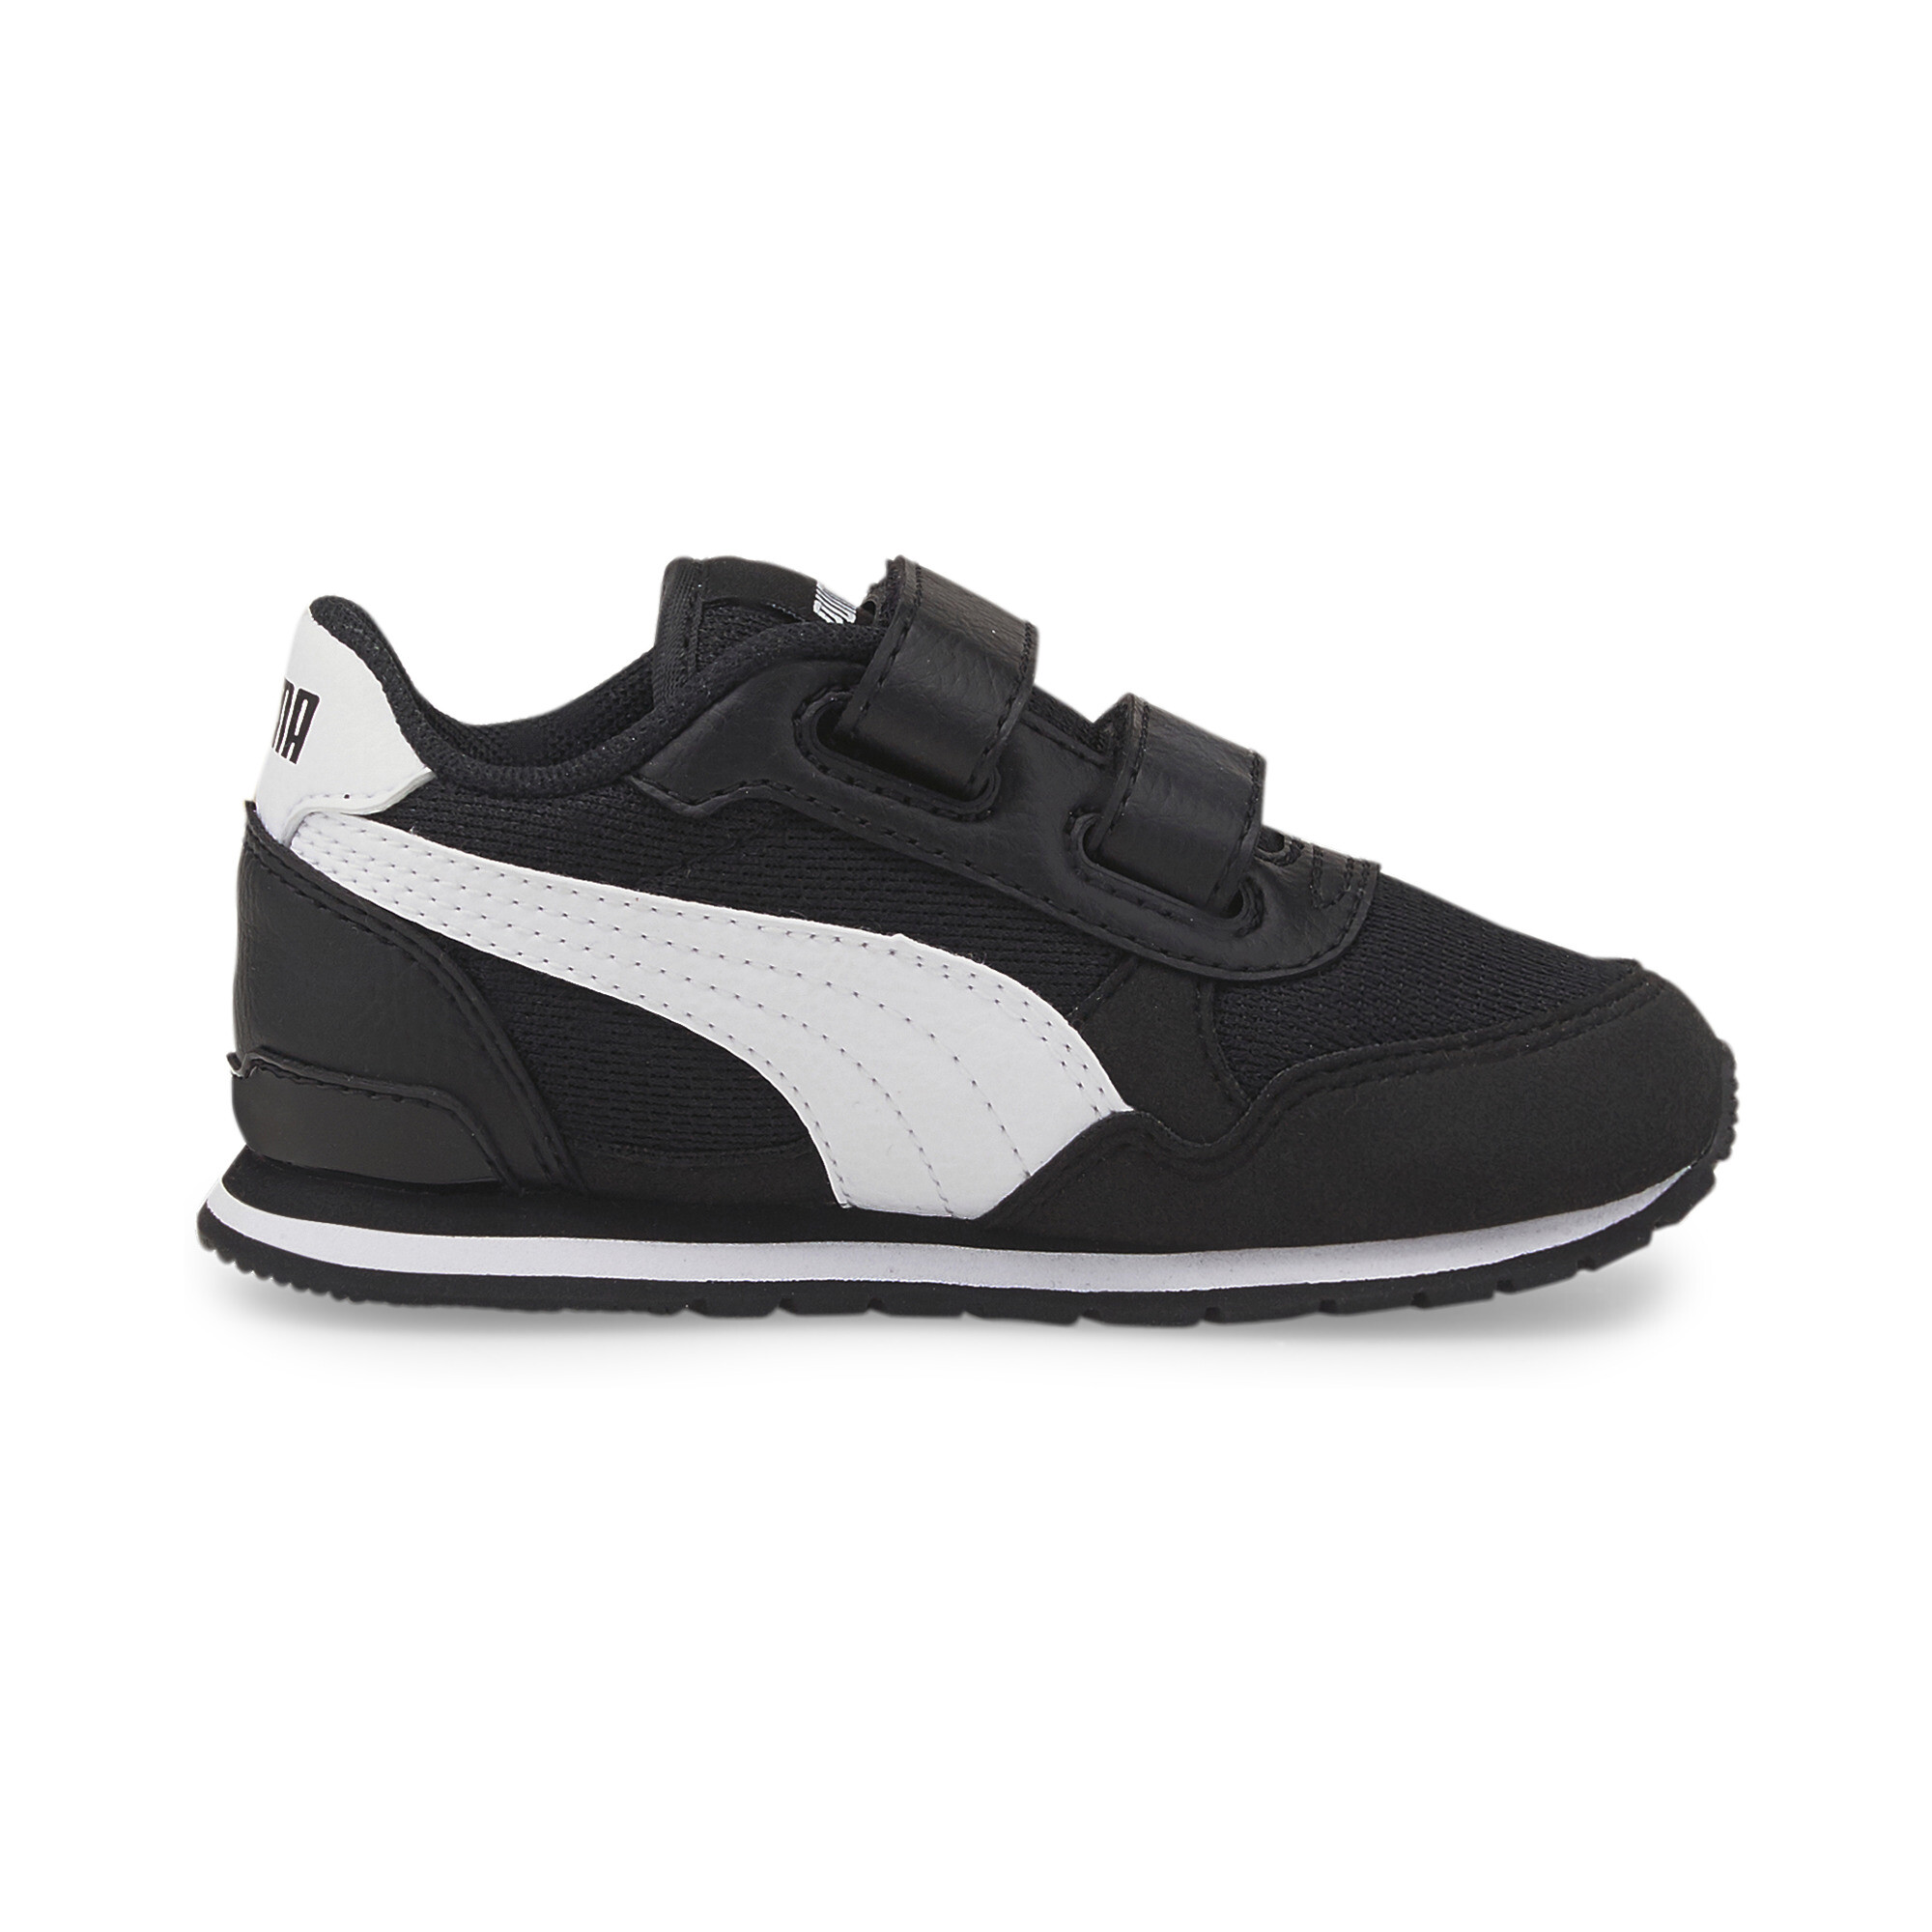 Puma ST Runner V3 Mesh V Babies' Trainers, Black, Size 22, Shoes